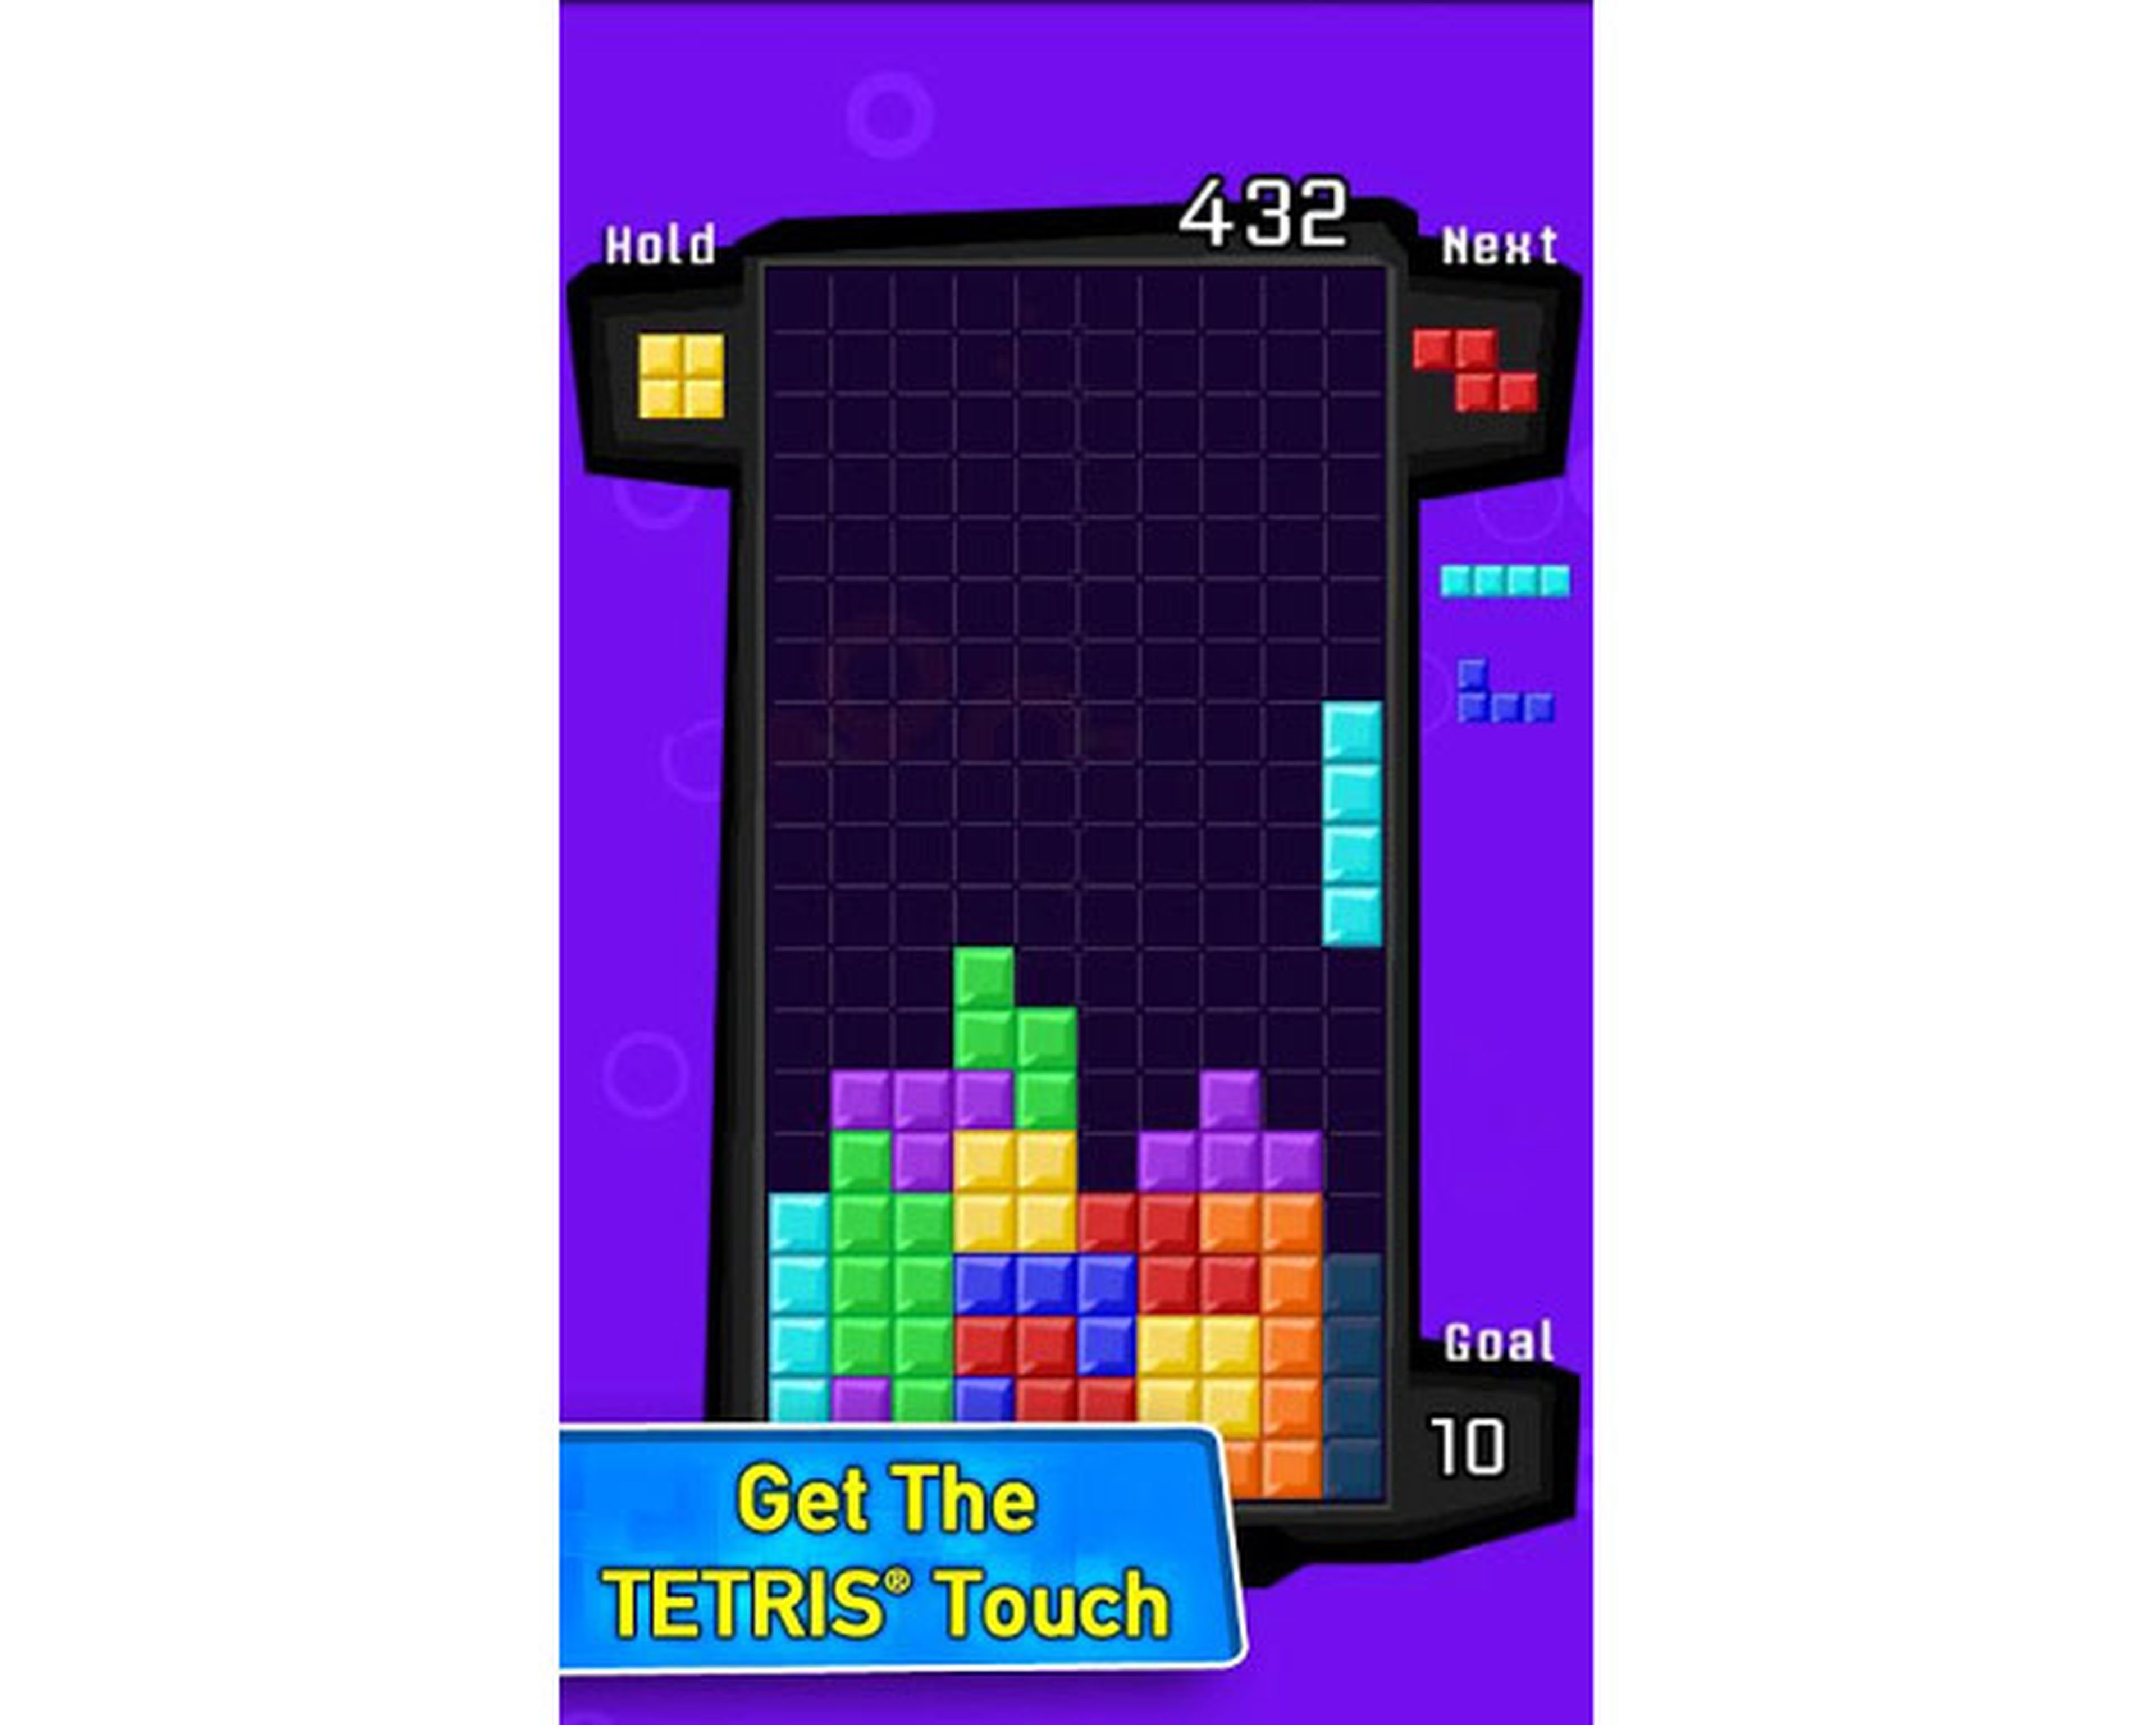 Tetris. Ingeniería hecha videojuego